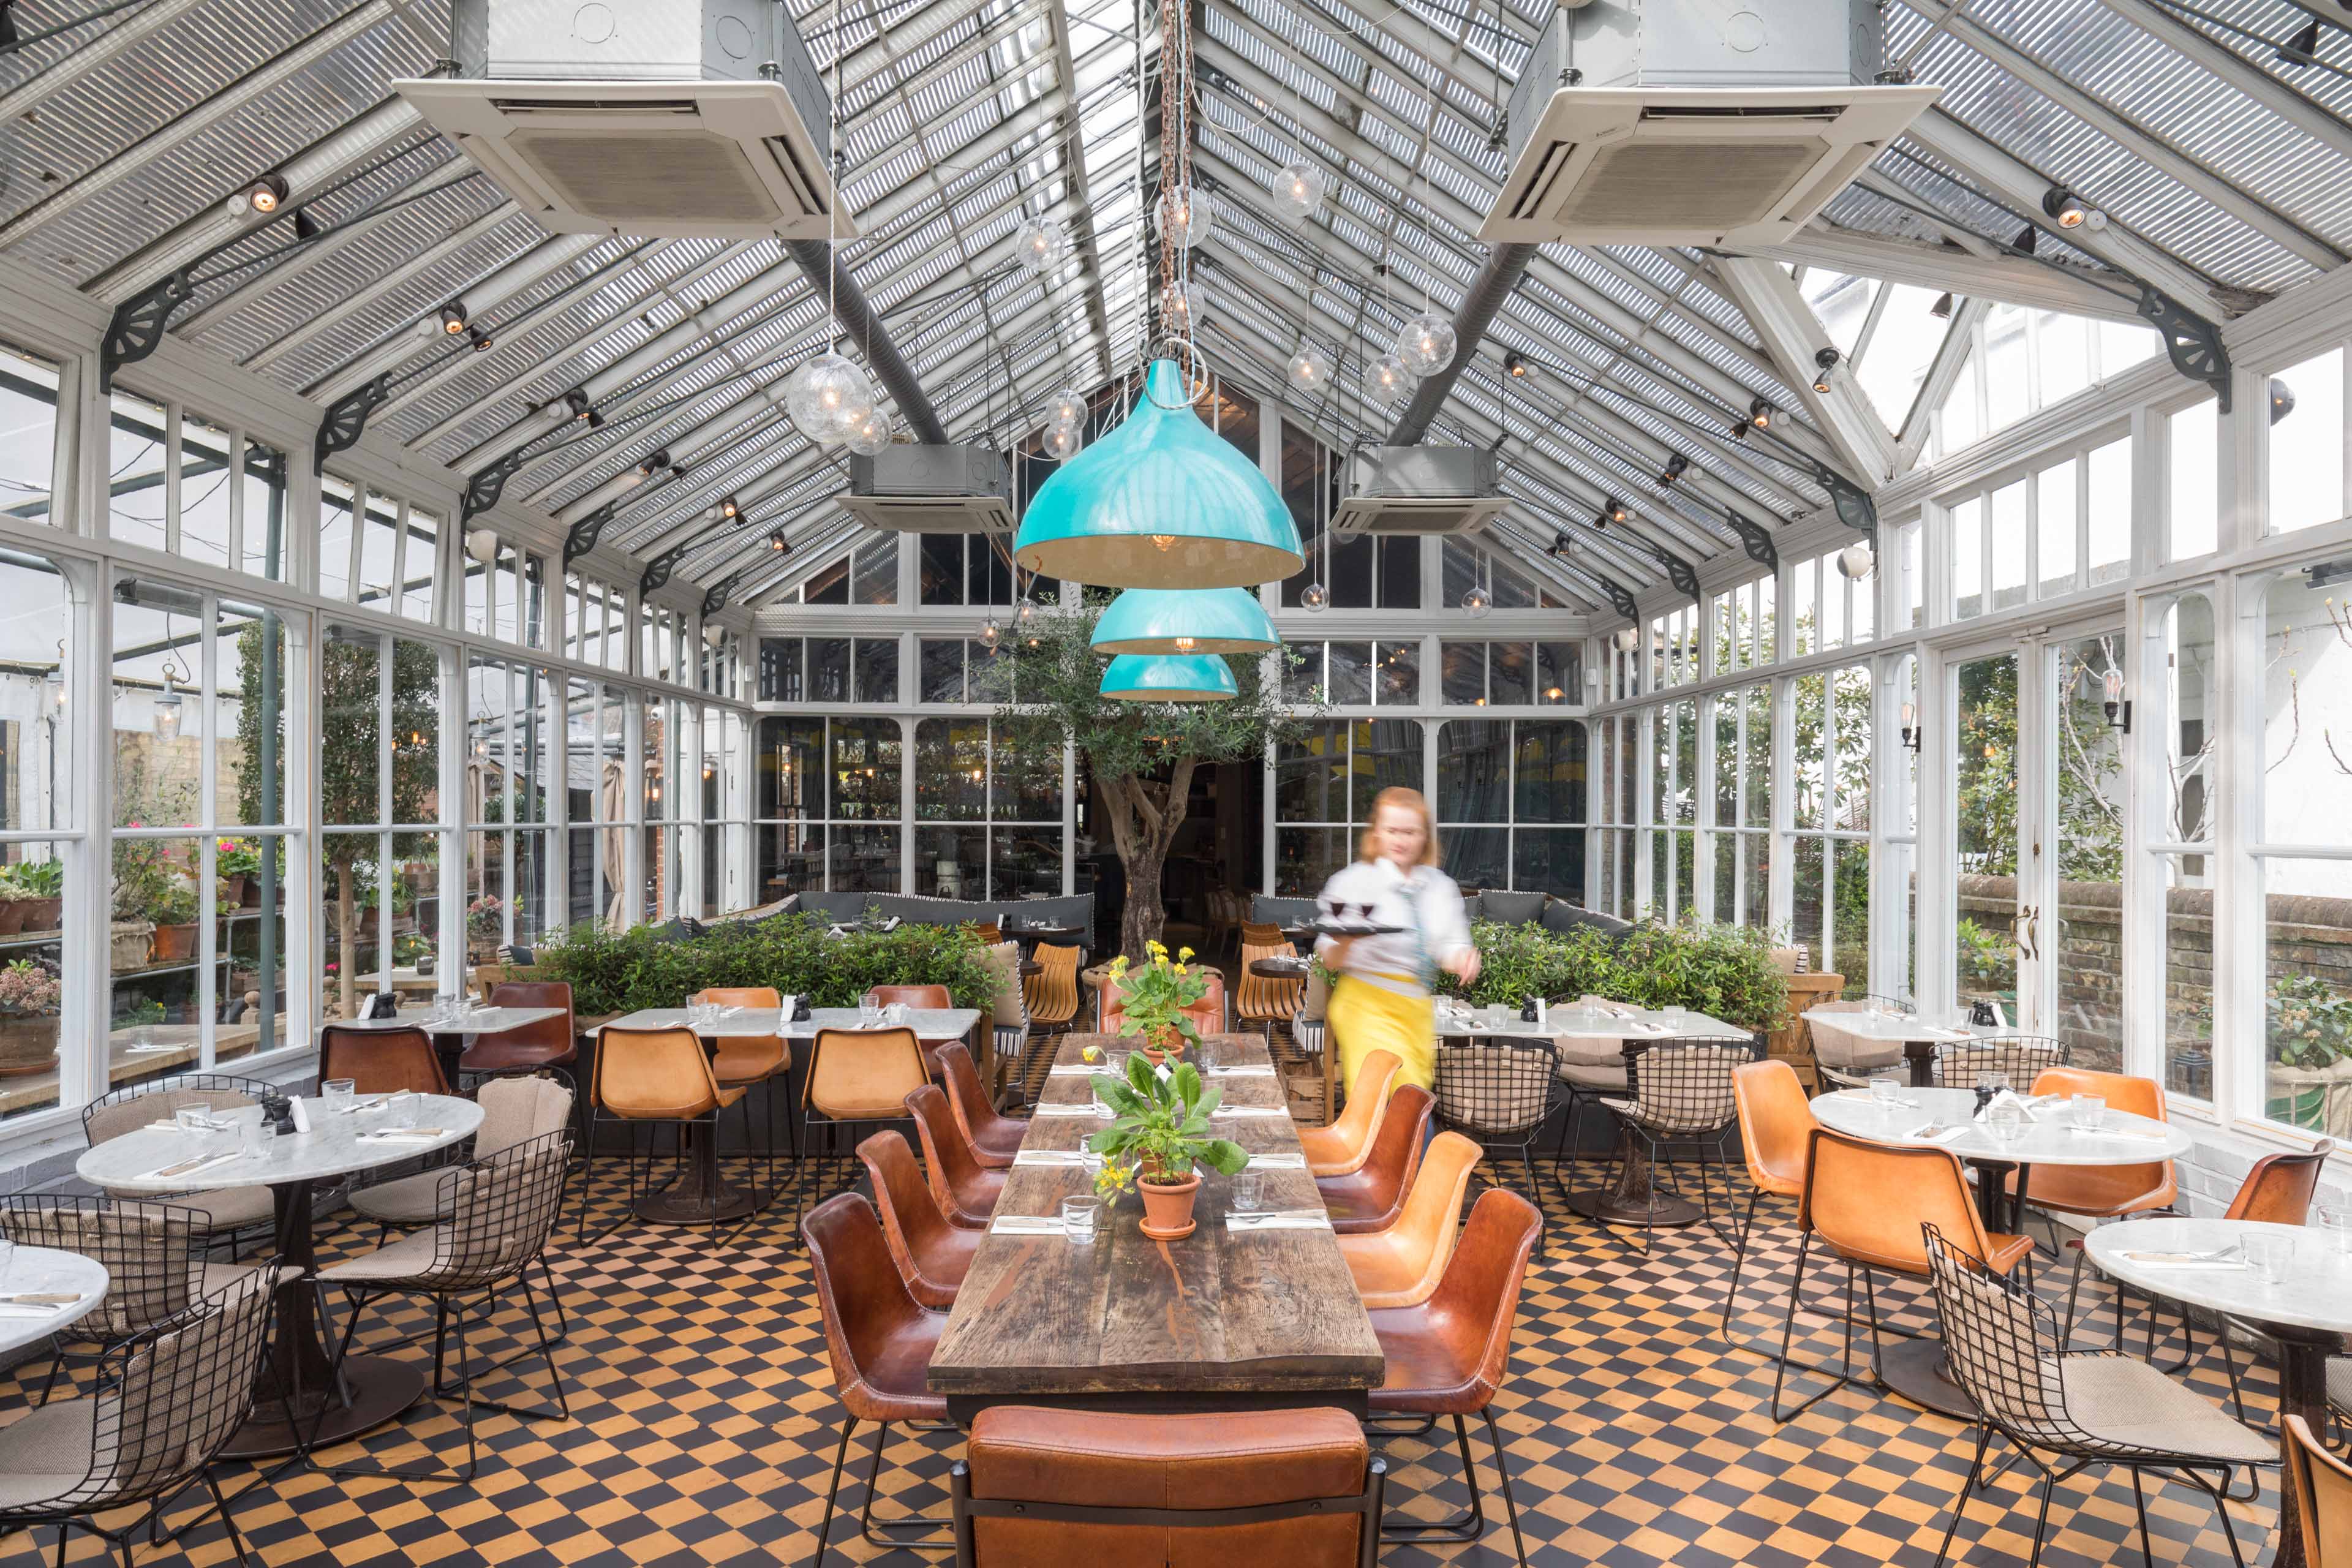 002 - 2019 - Gees Restaurant & Bar - Oxford - High res - Interior Restaurant Waitress 1 - Web Hero